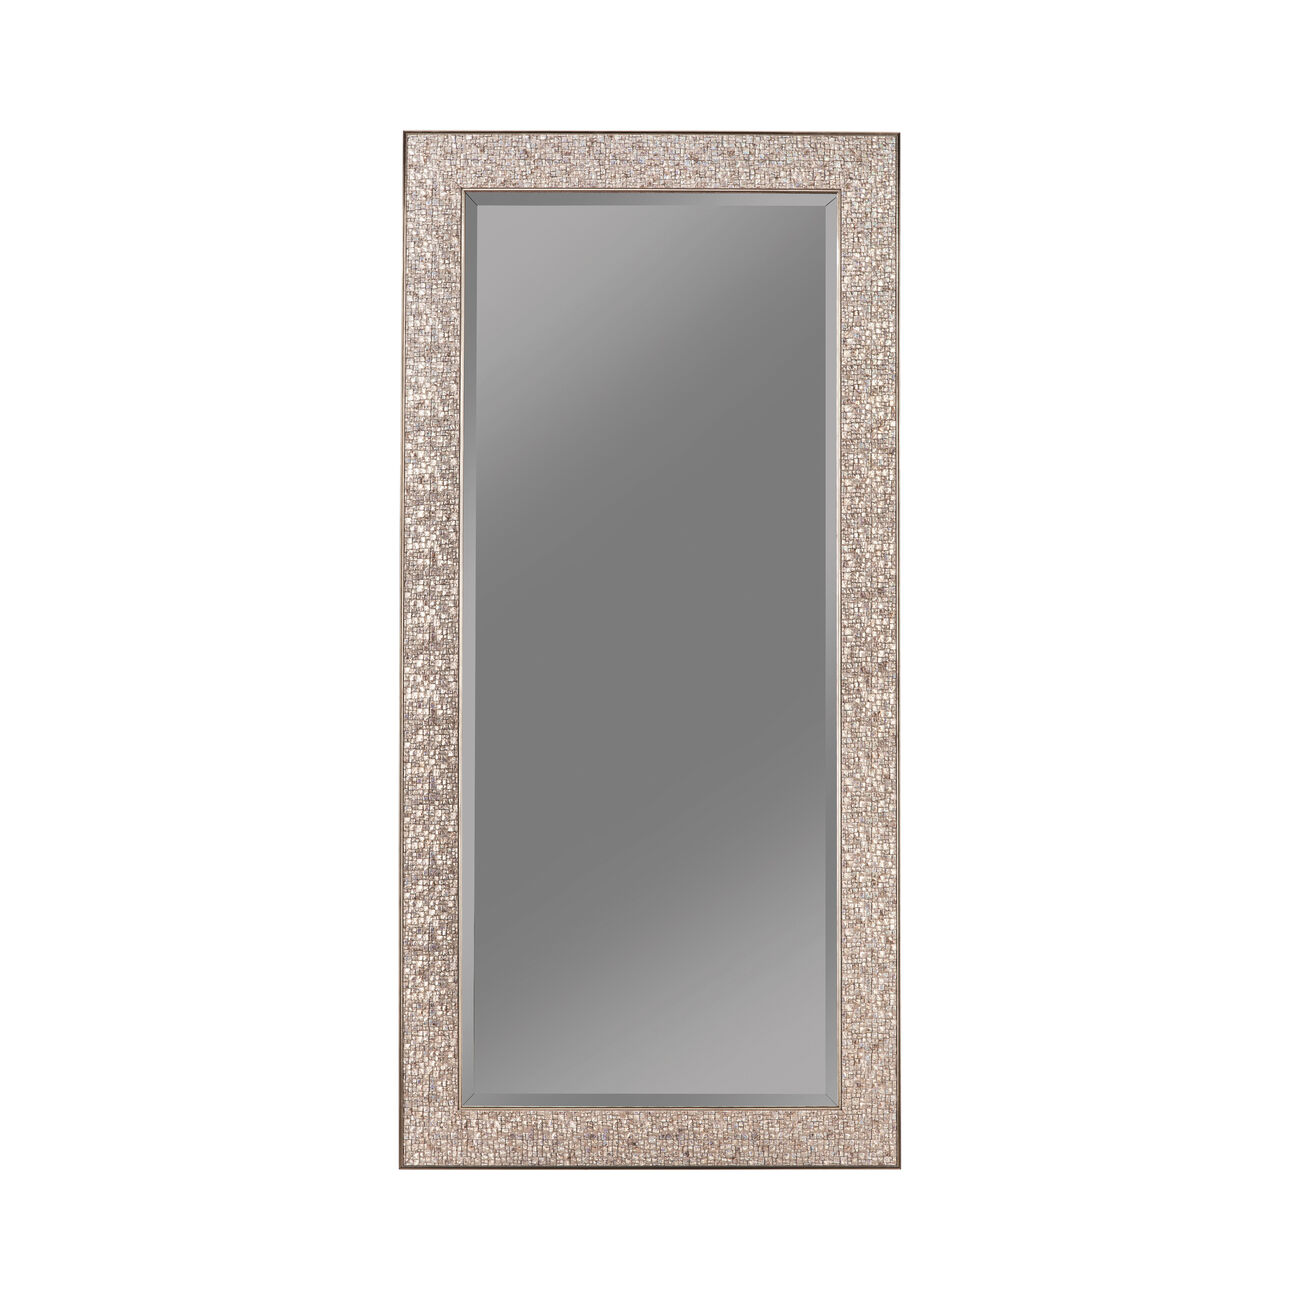 Rectangular Beveled Accent Floor Mirror with Glitter Mosaic Pattern, Silver